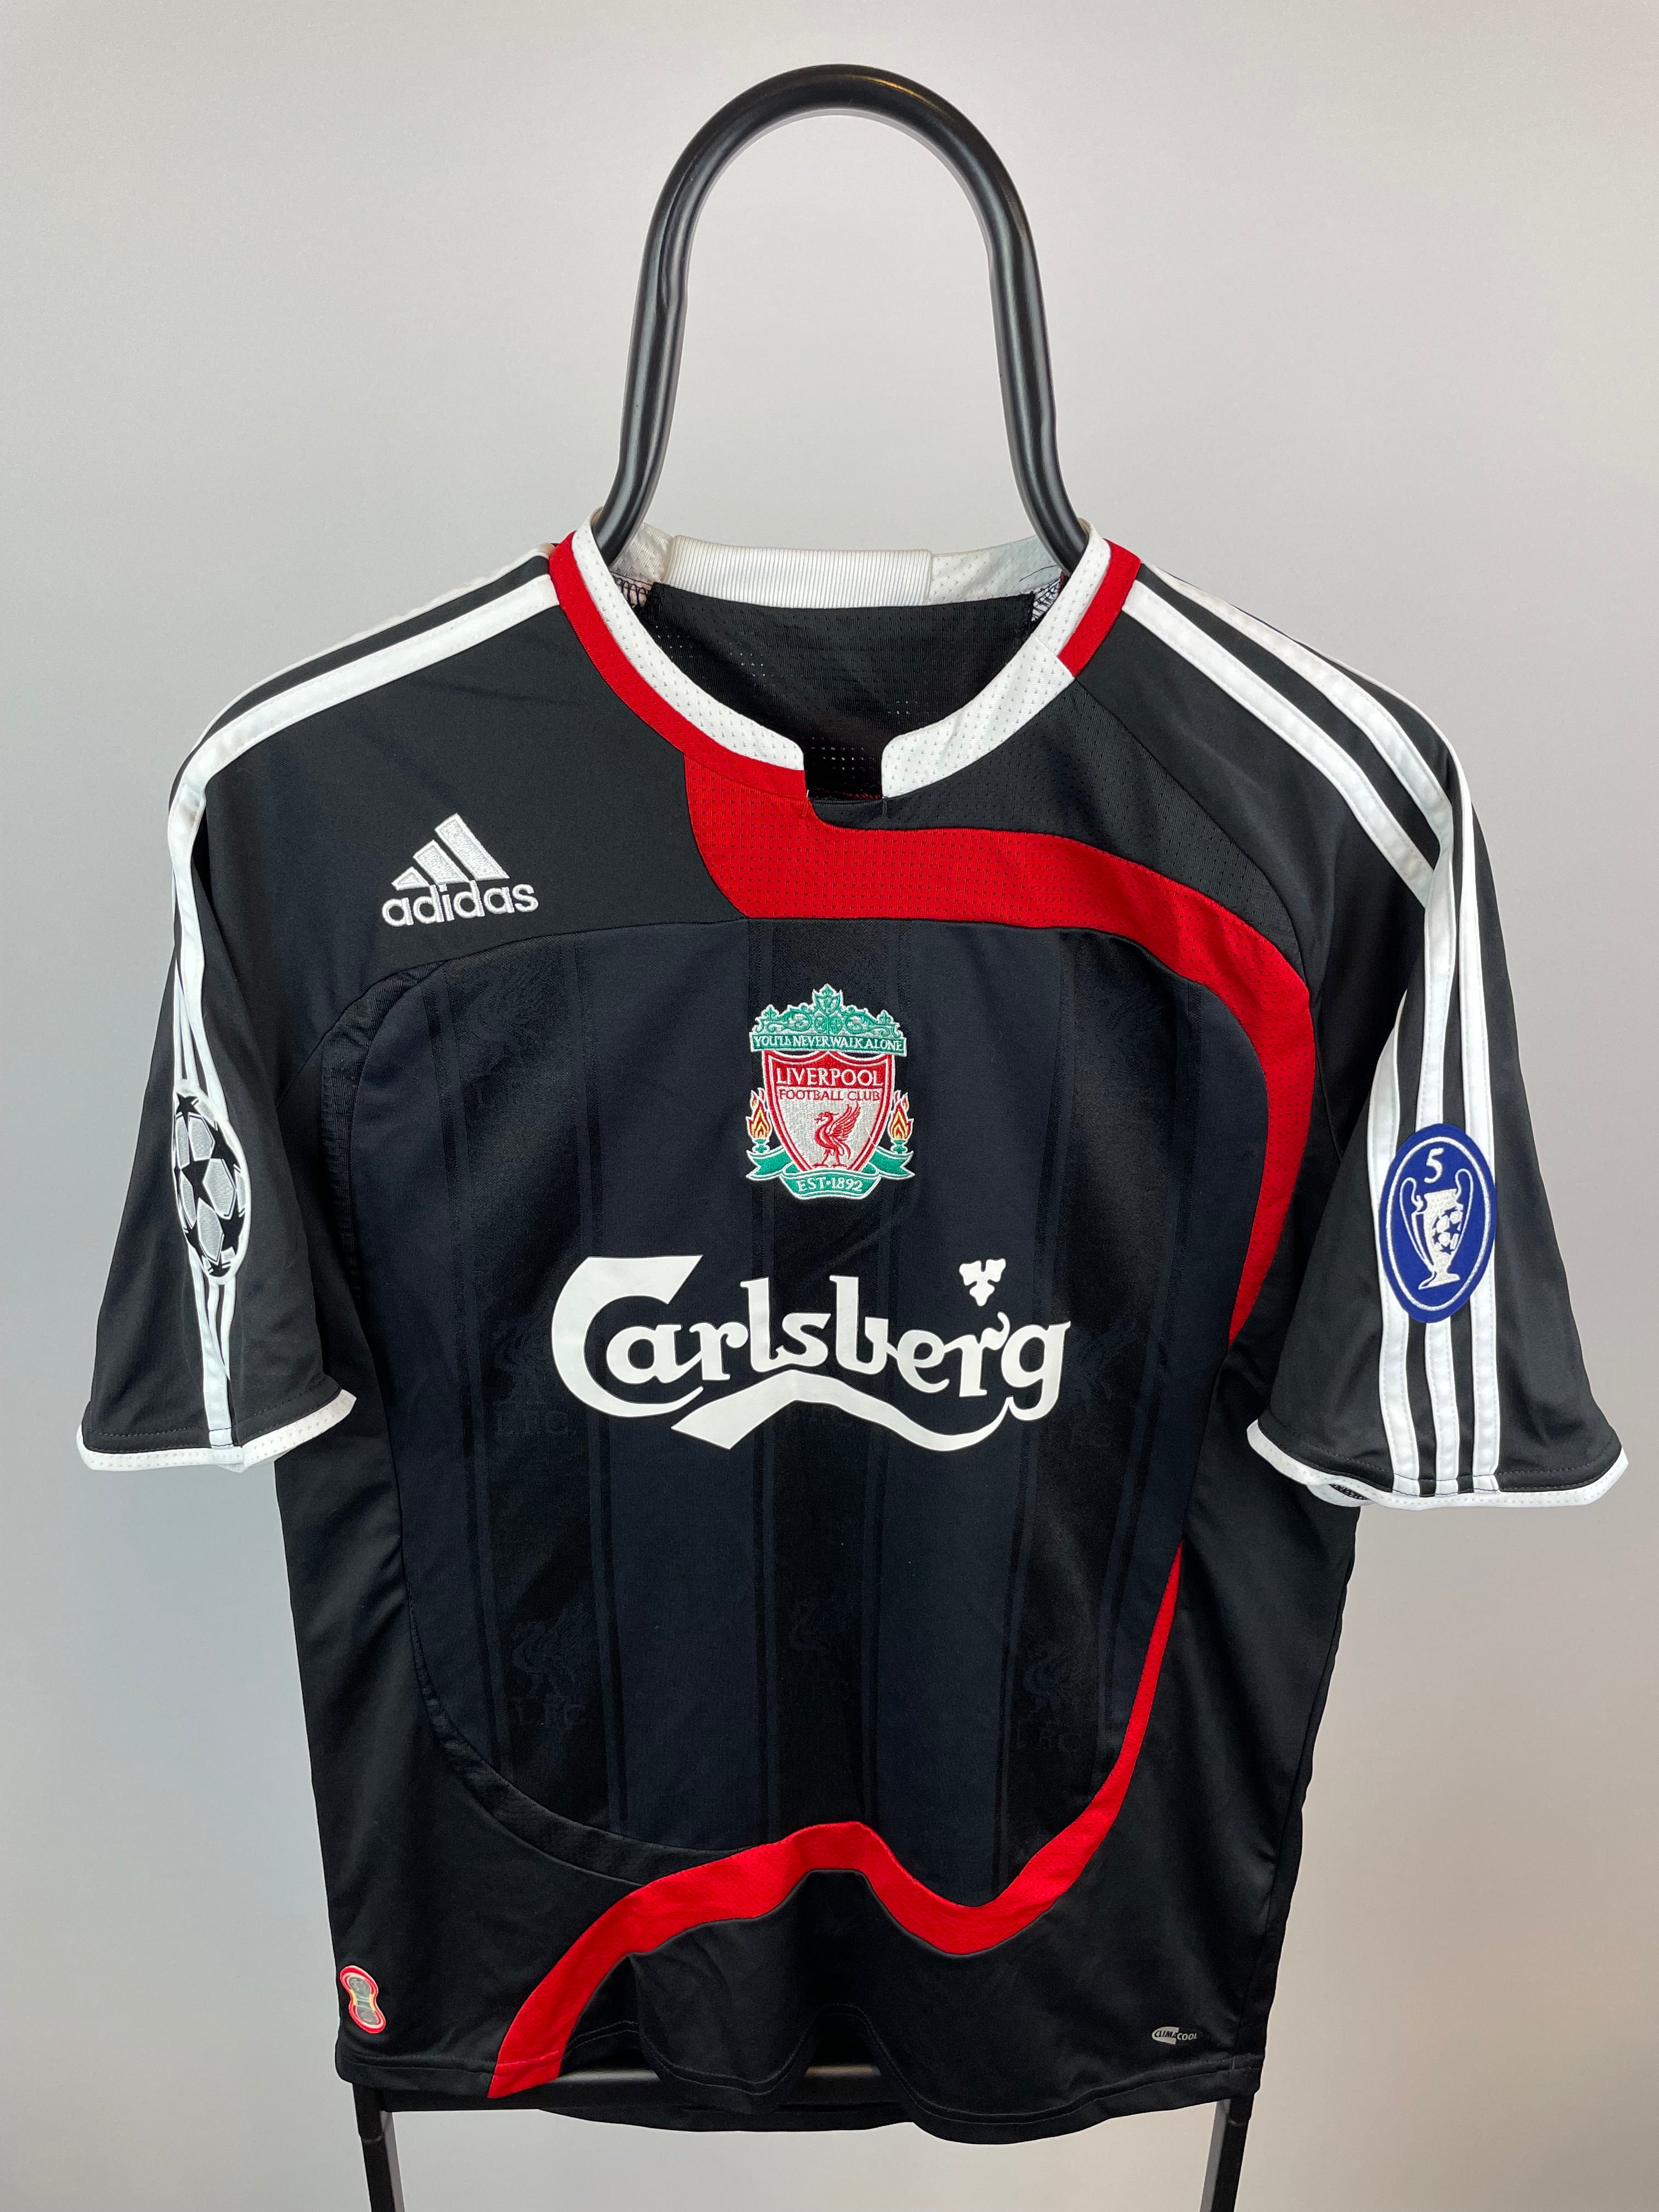 Steven Gerrard Liverpool 07/08 3 trøje - S